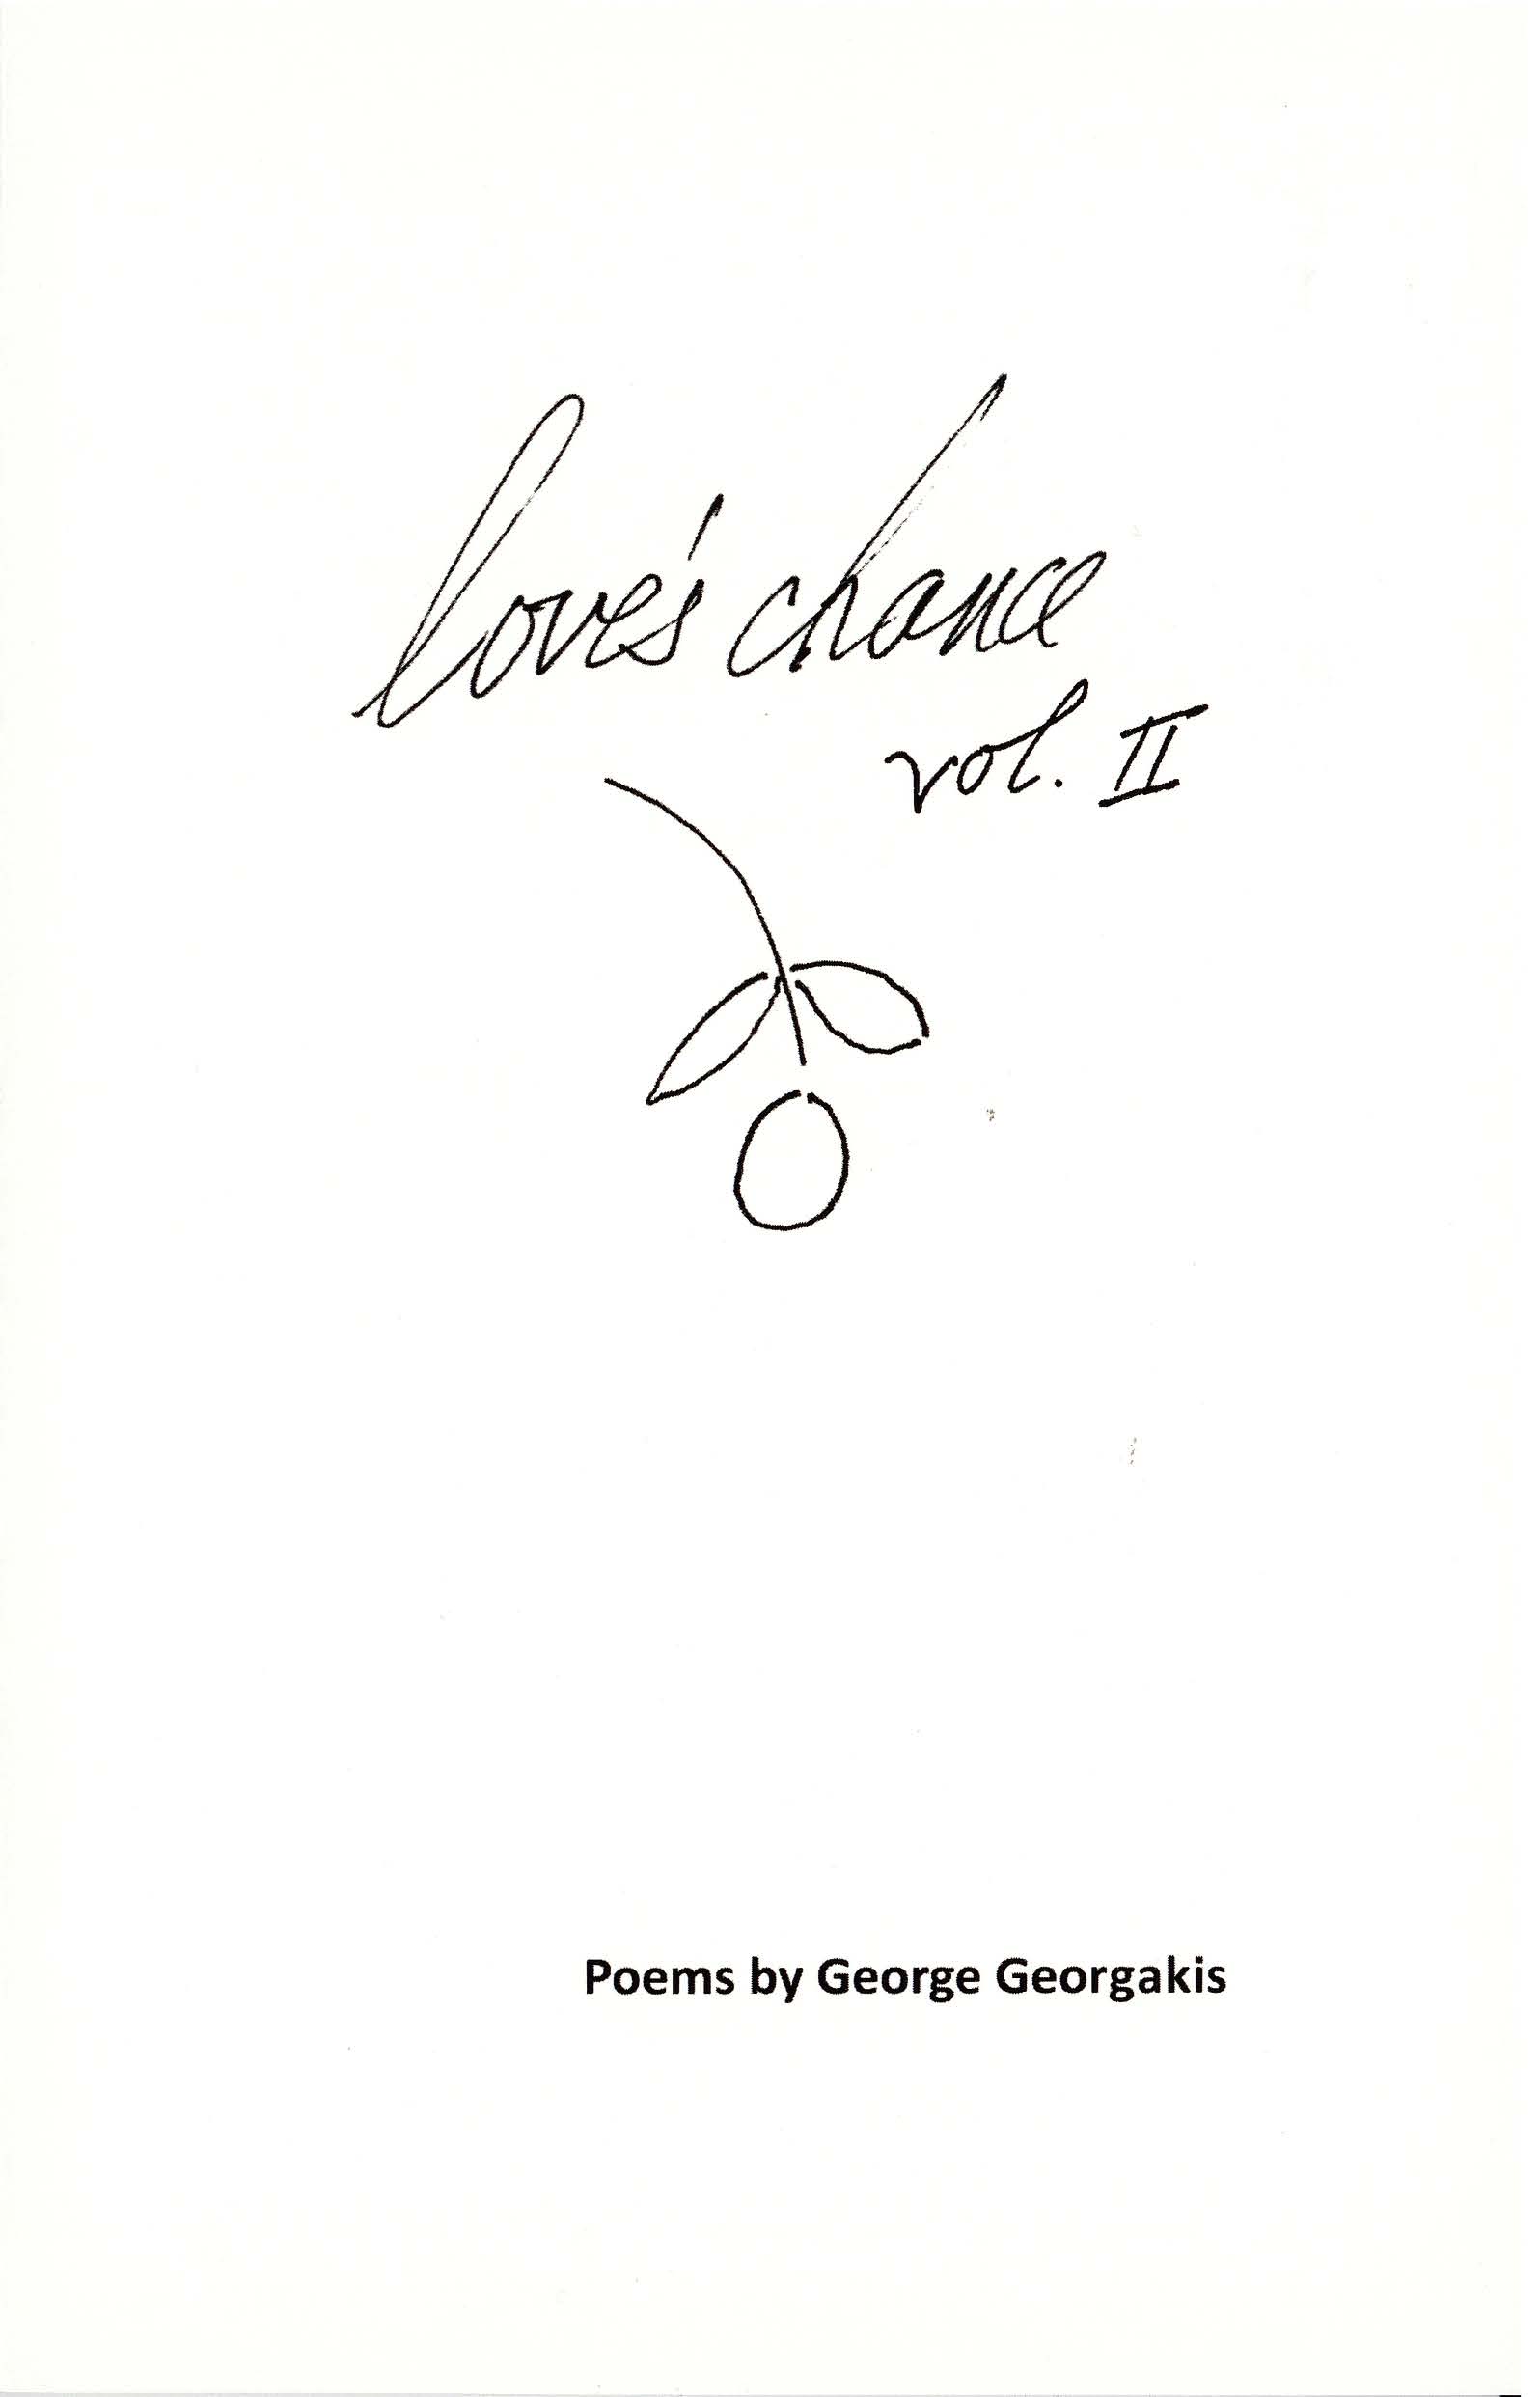 love’s chance (Vol. II)